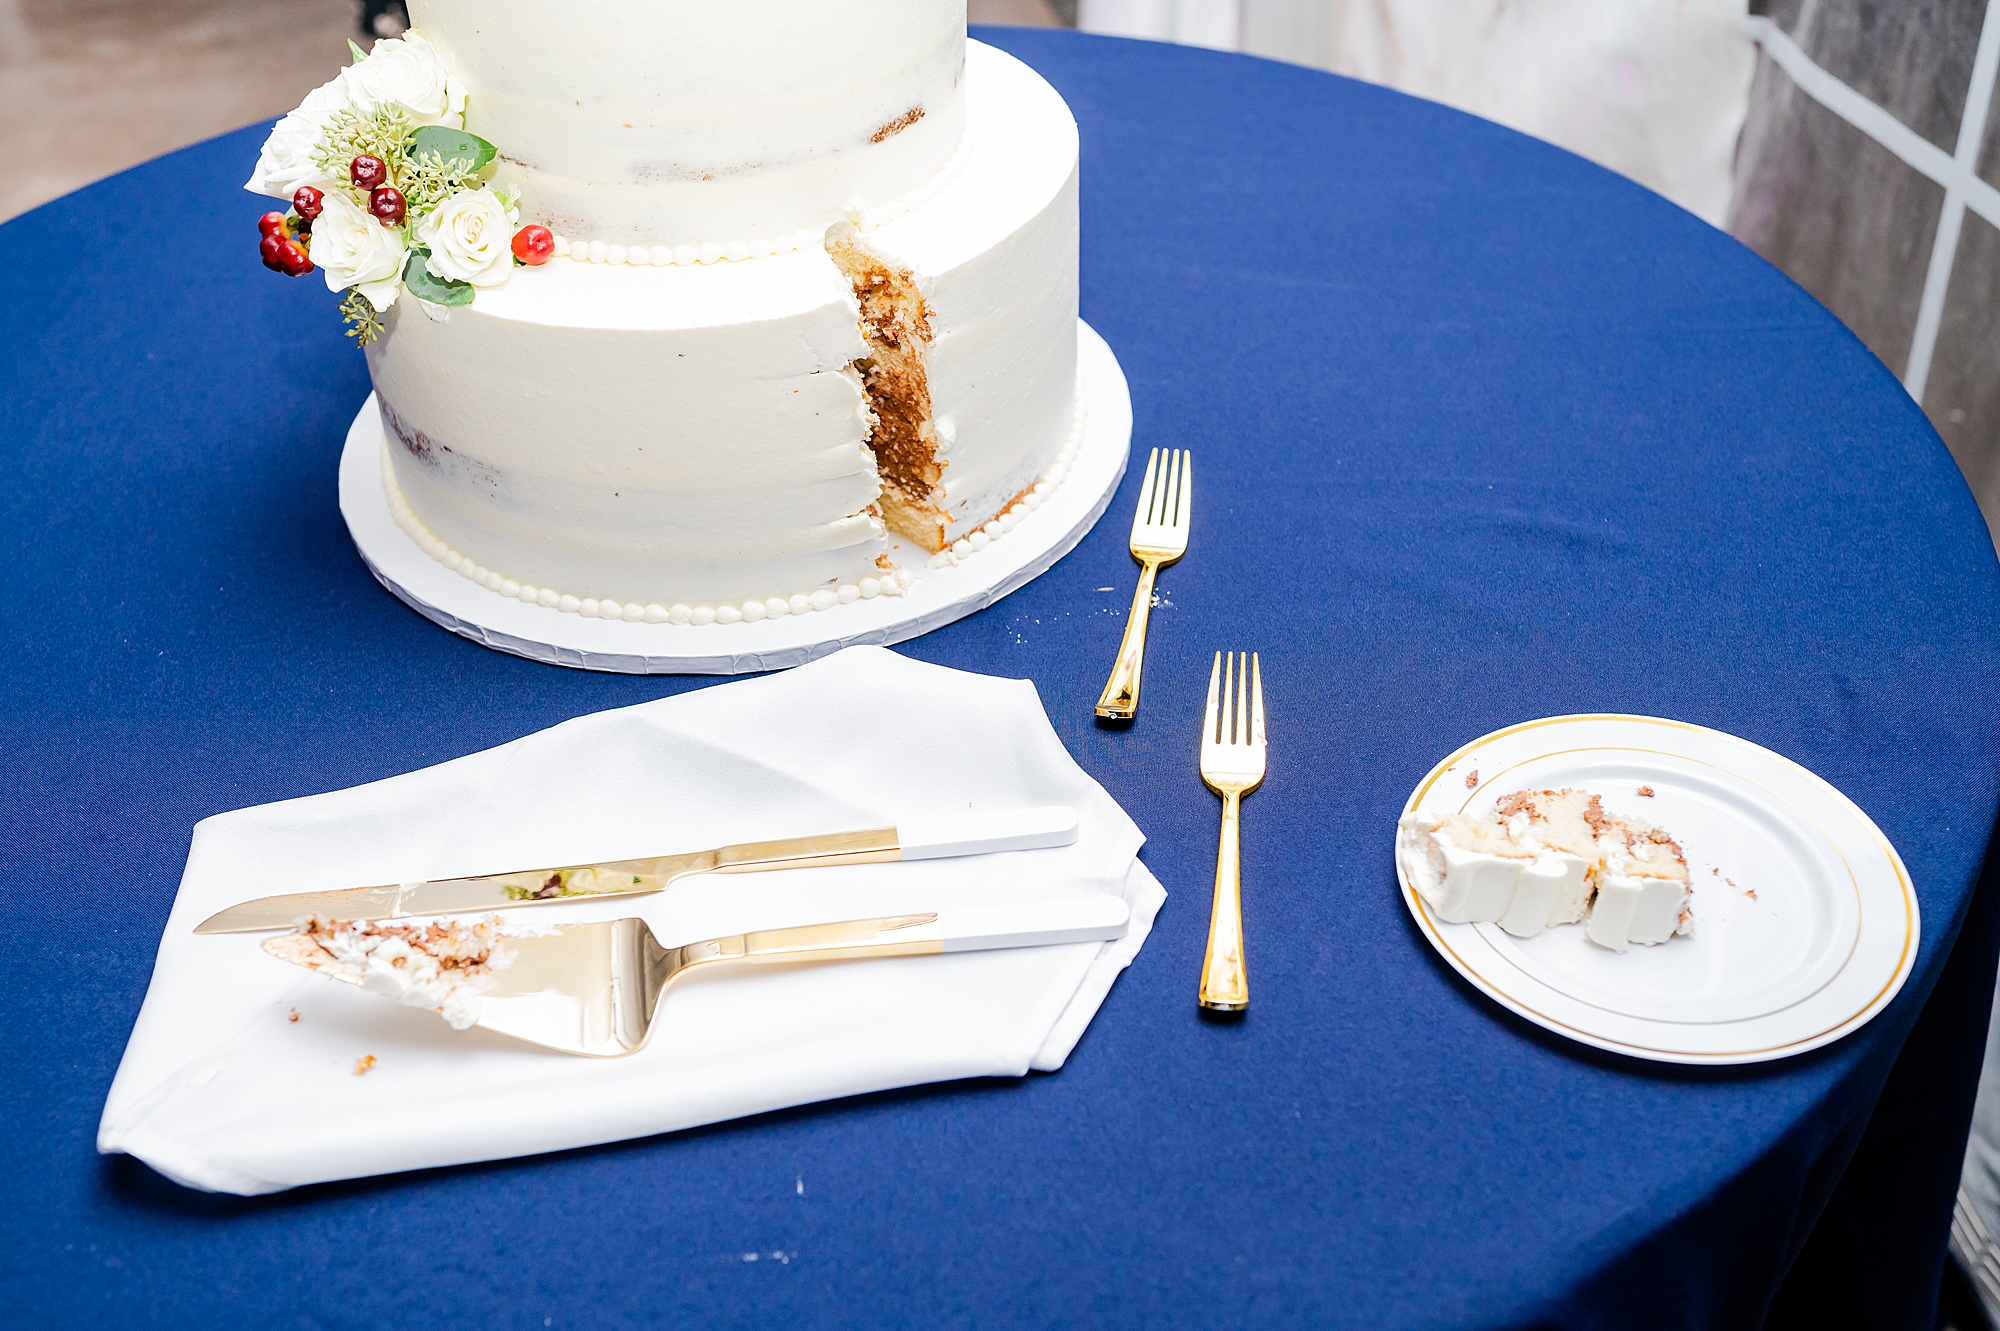 wedding cake slice cut during John's Island reception